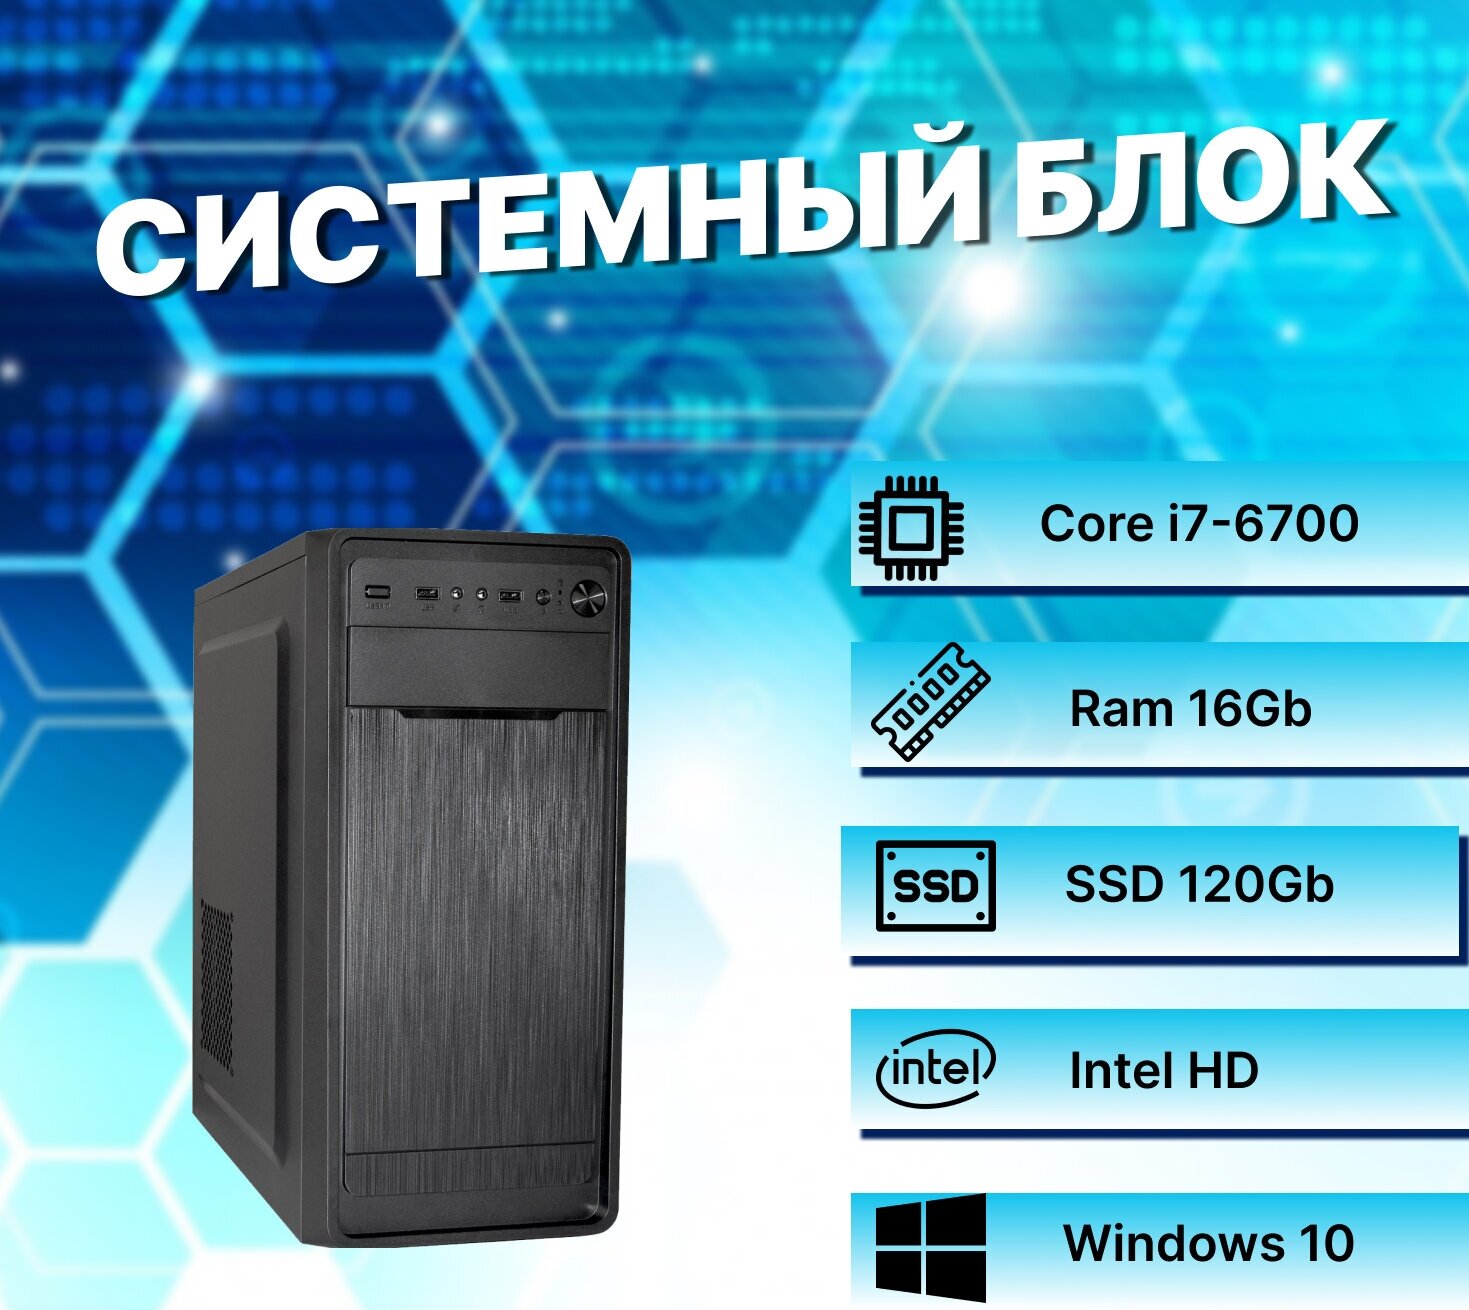 Системный блок Intel Core I7-6700 (3.4ГГц)/ RAM 16Gb/ SSD 120Gb/ Intel HD/ Windows 10 Pro